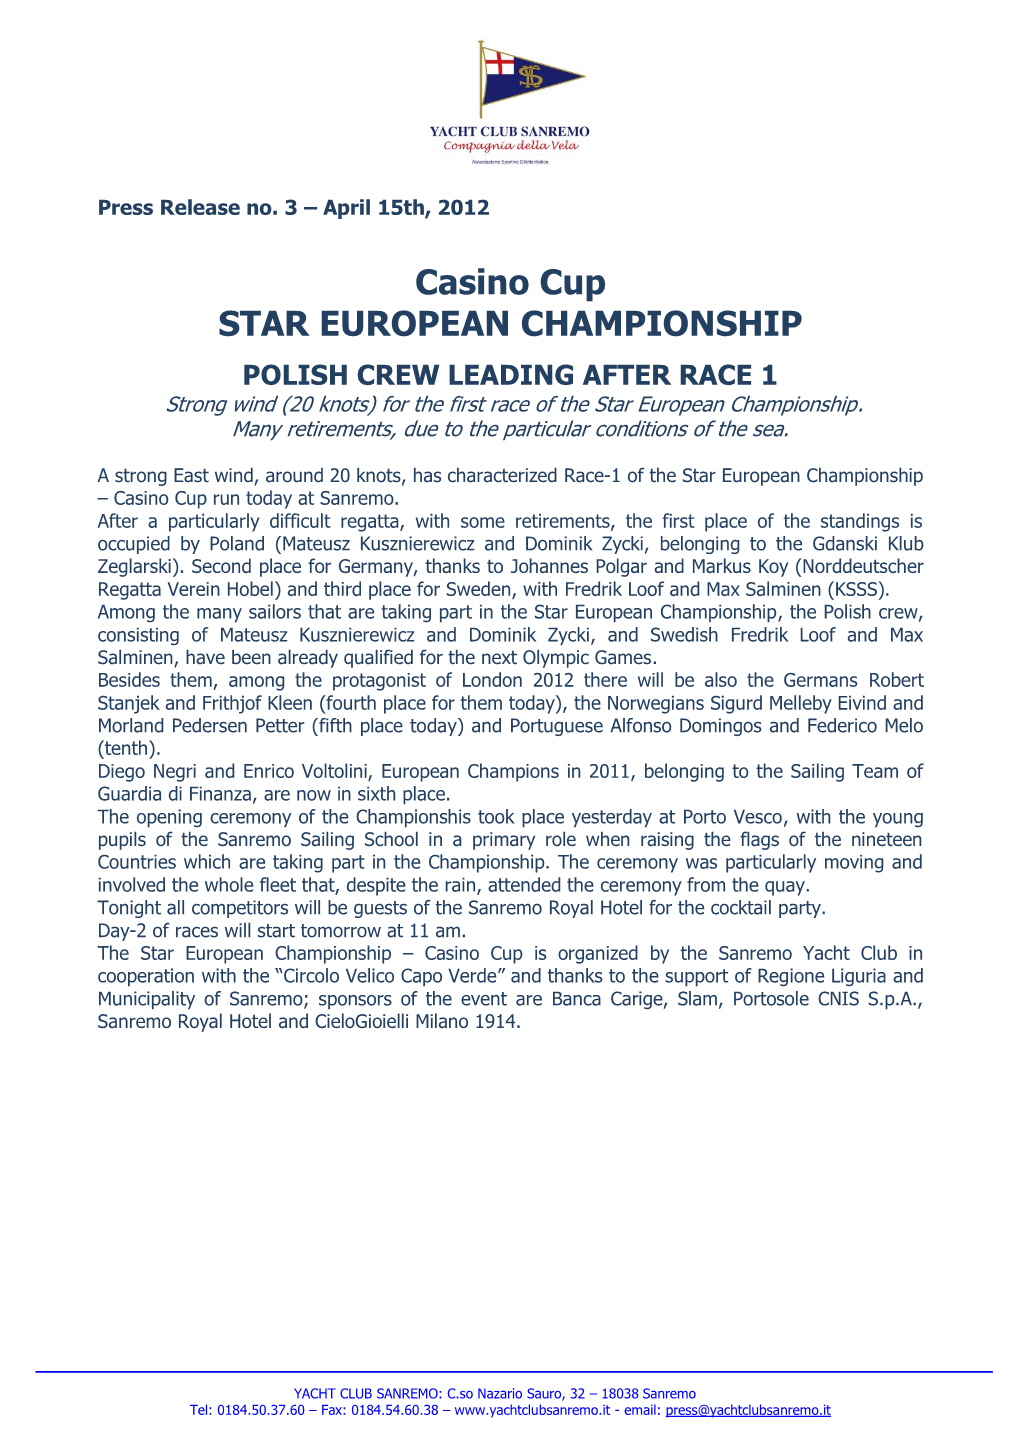 Casino Cup STAR EUROPEAN CHAMPIONSHIP